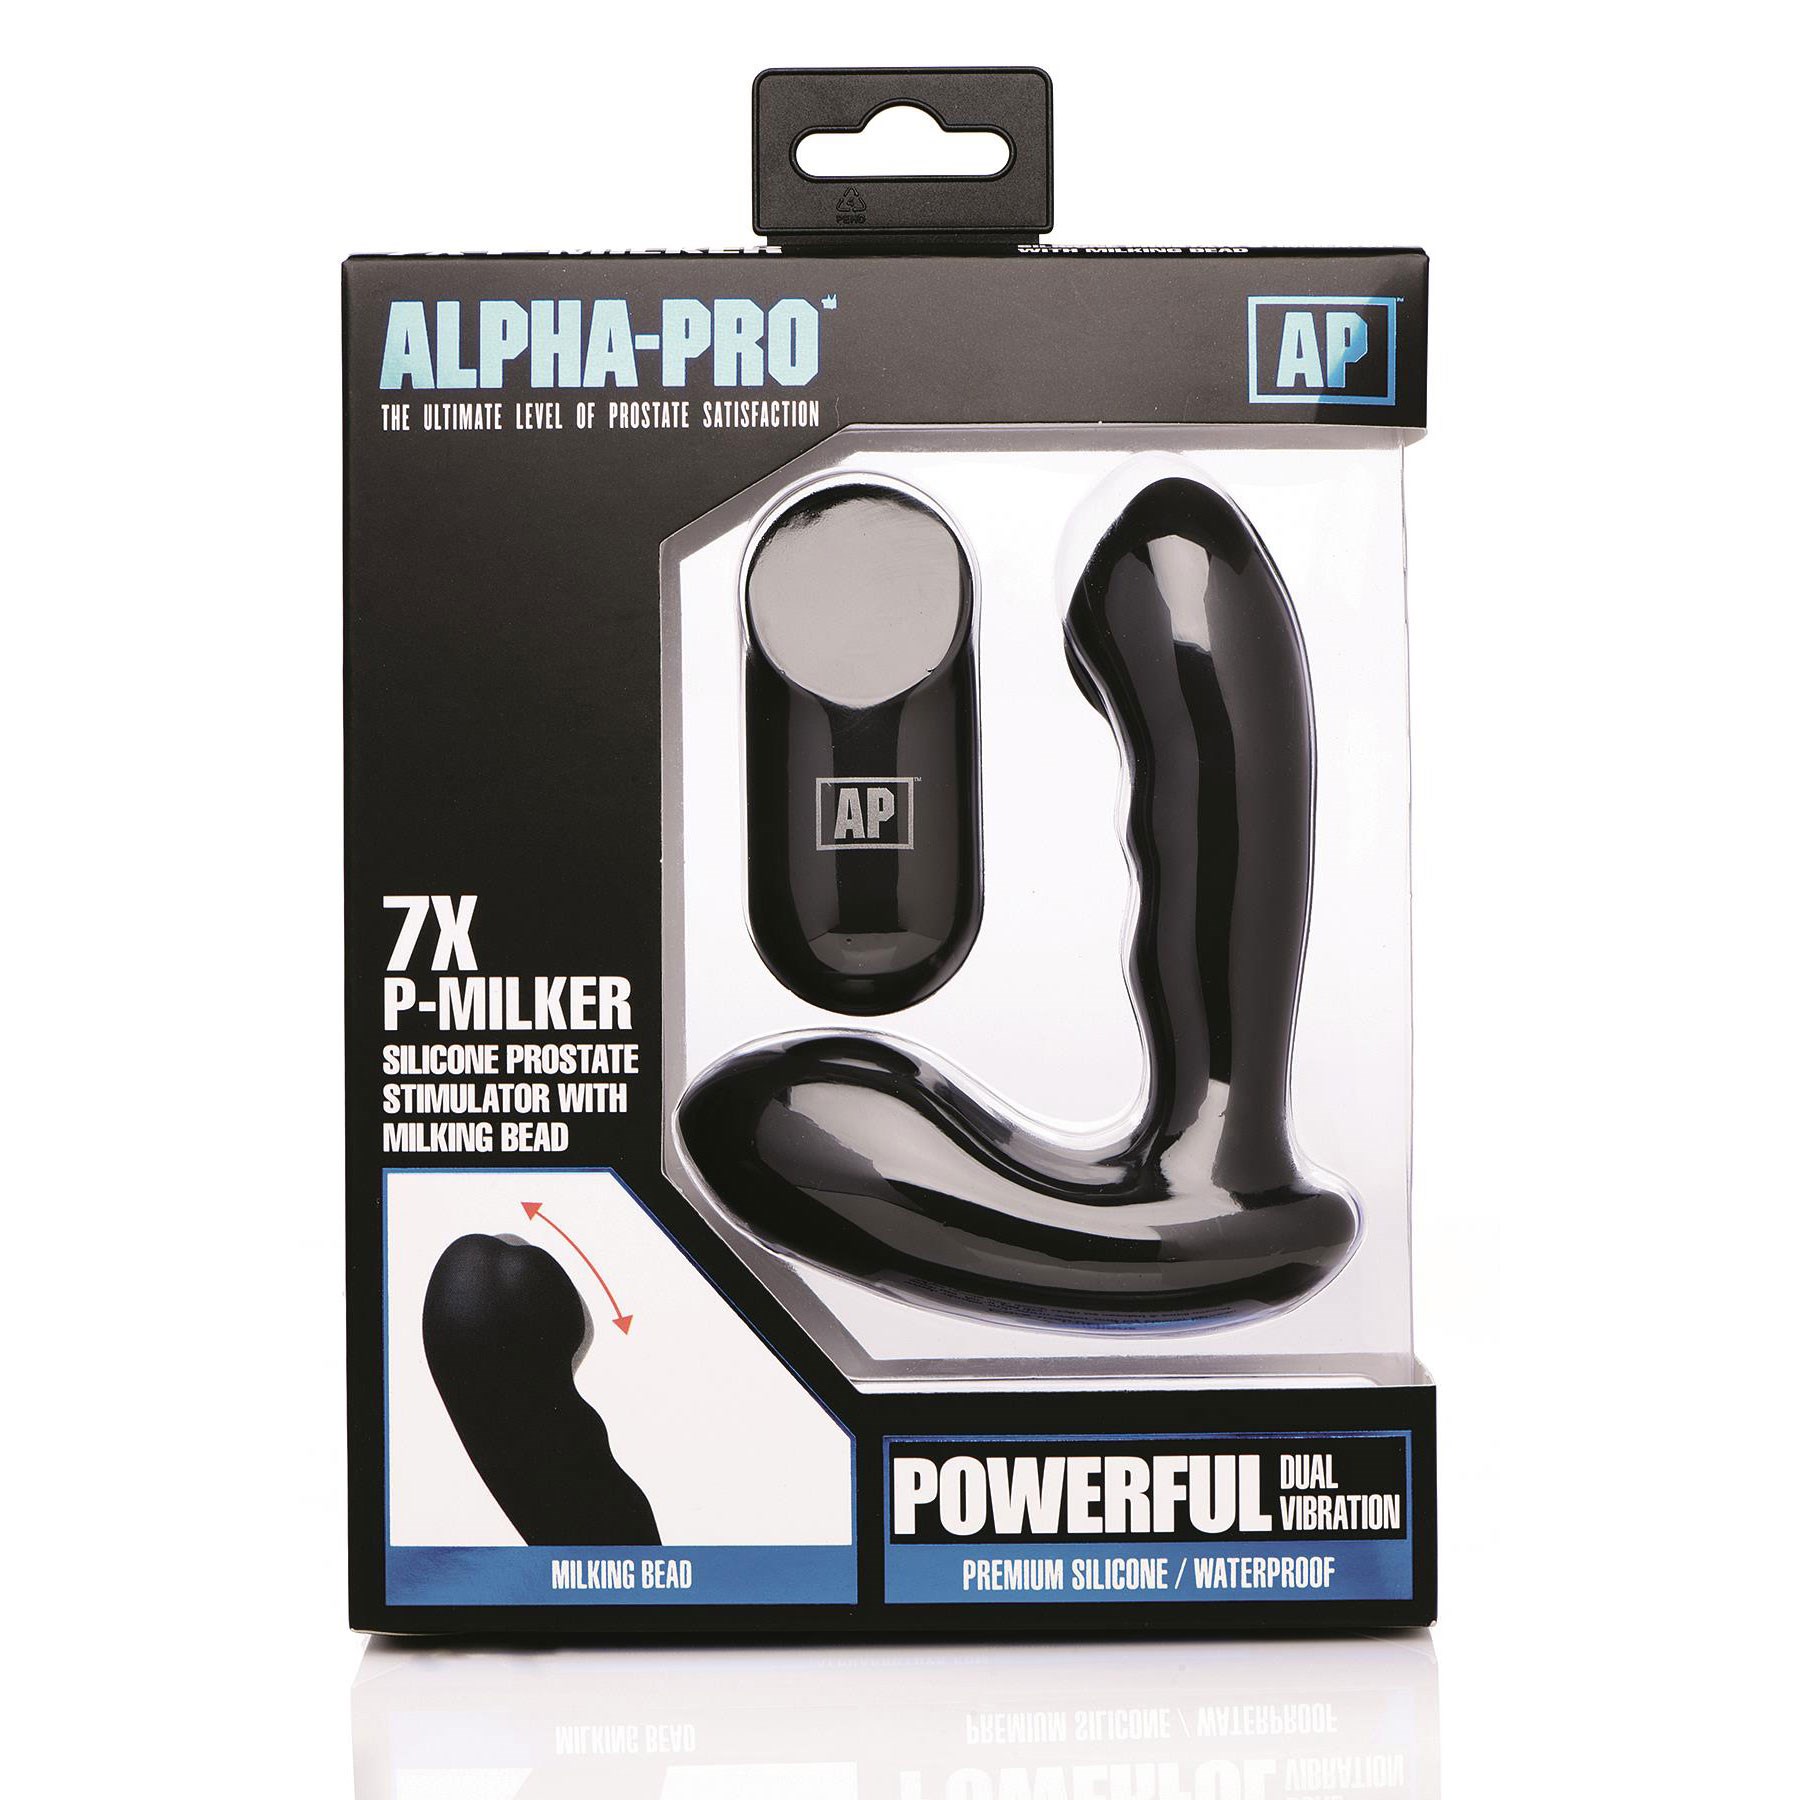 Alpha Pro 7Xp Milker Massager package